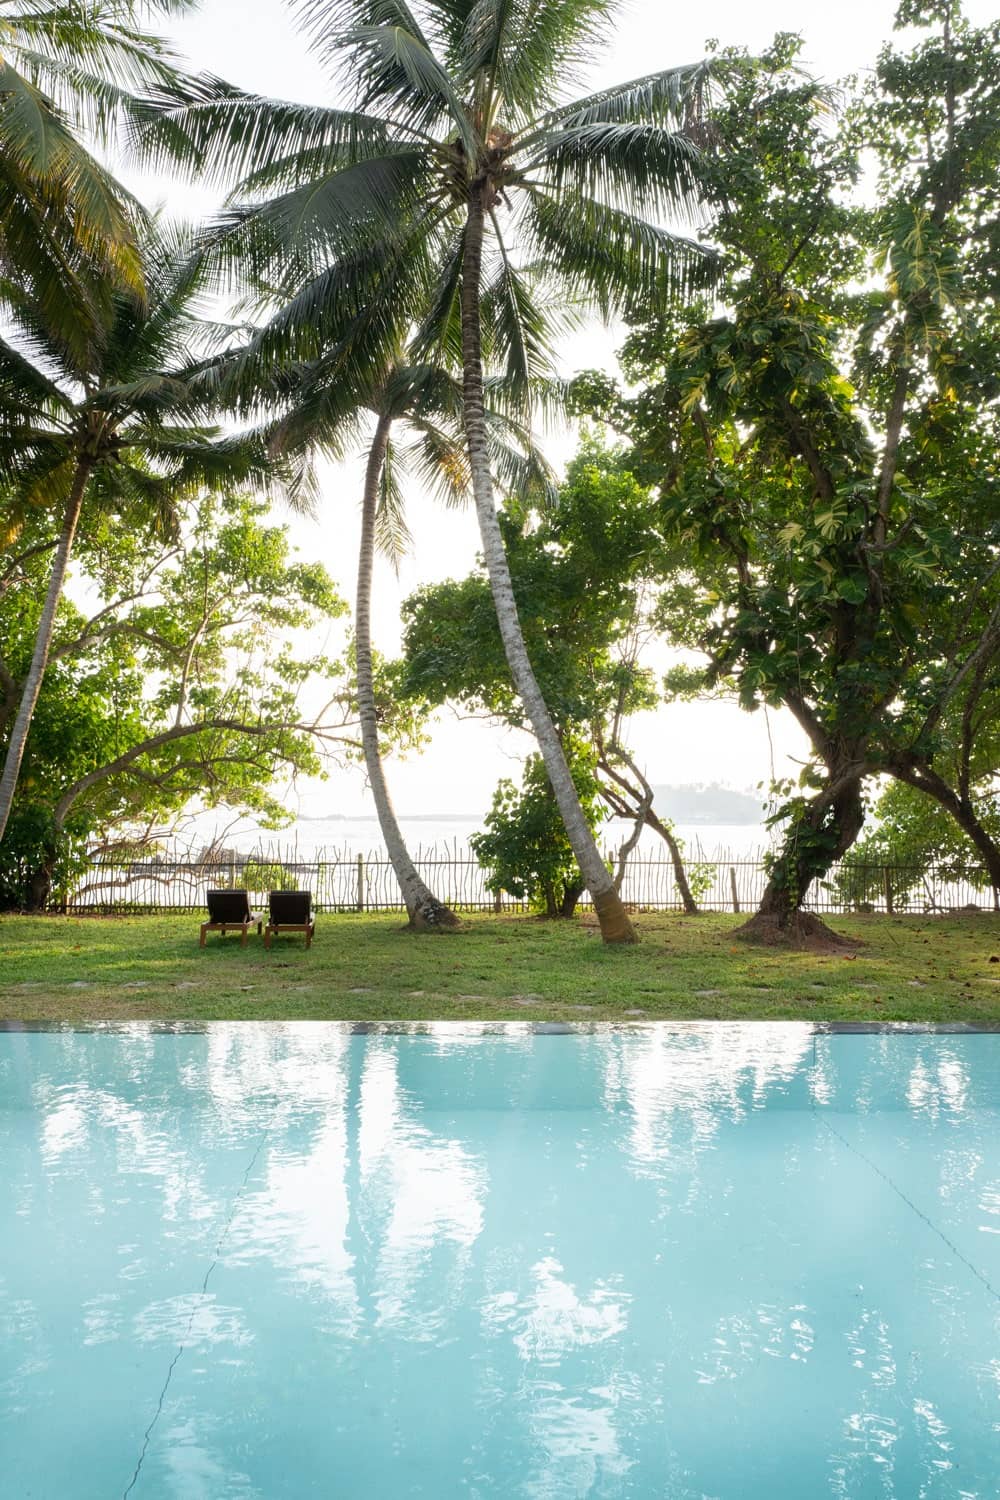 Resort Villa in Sri Lanka by Norm Architects & AIM Architecture